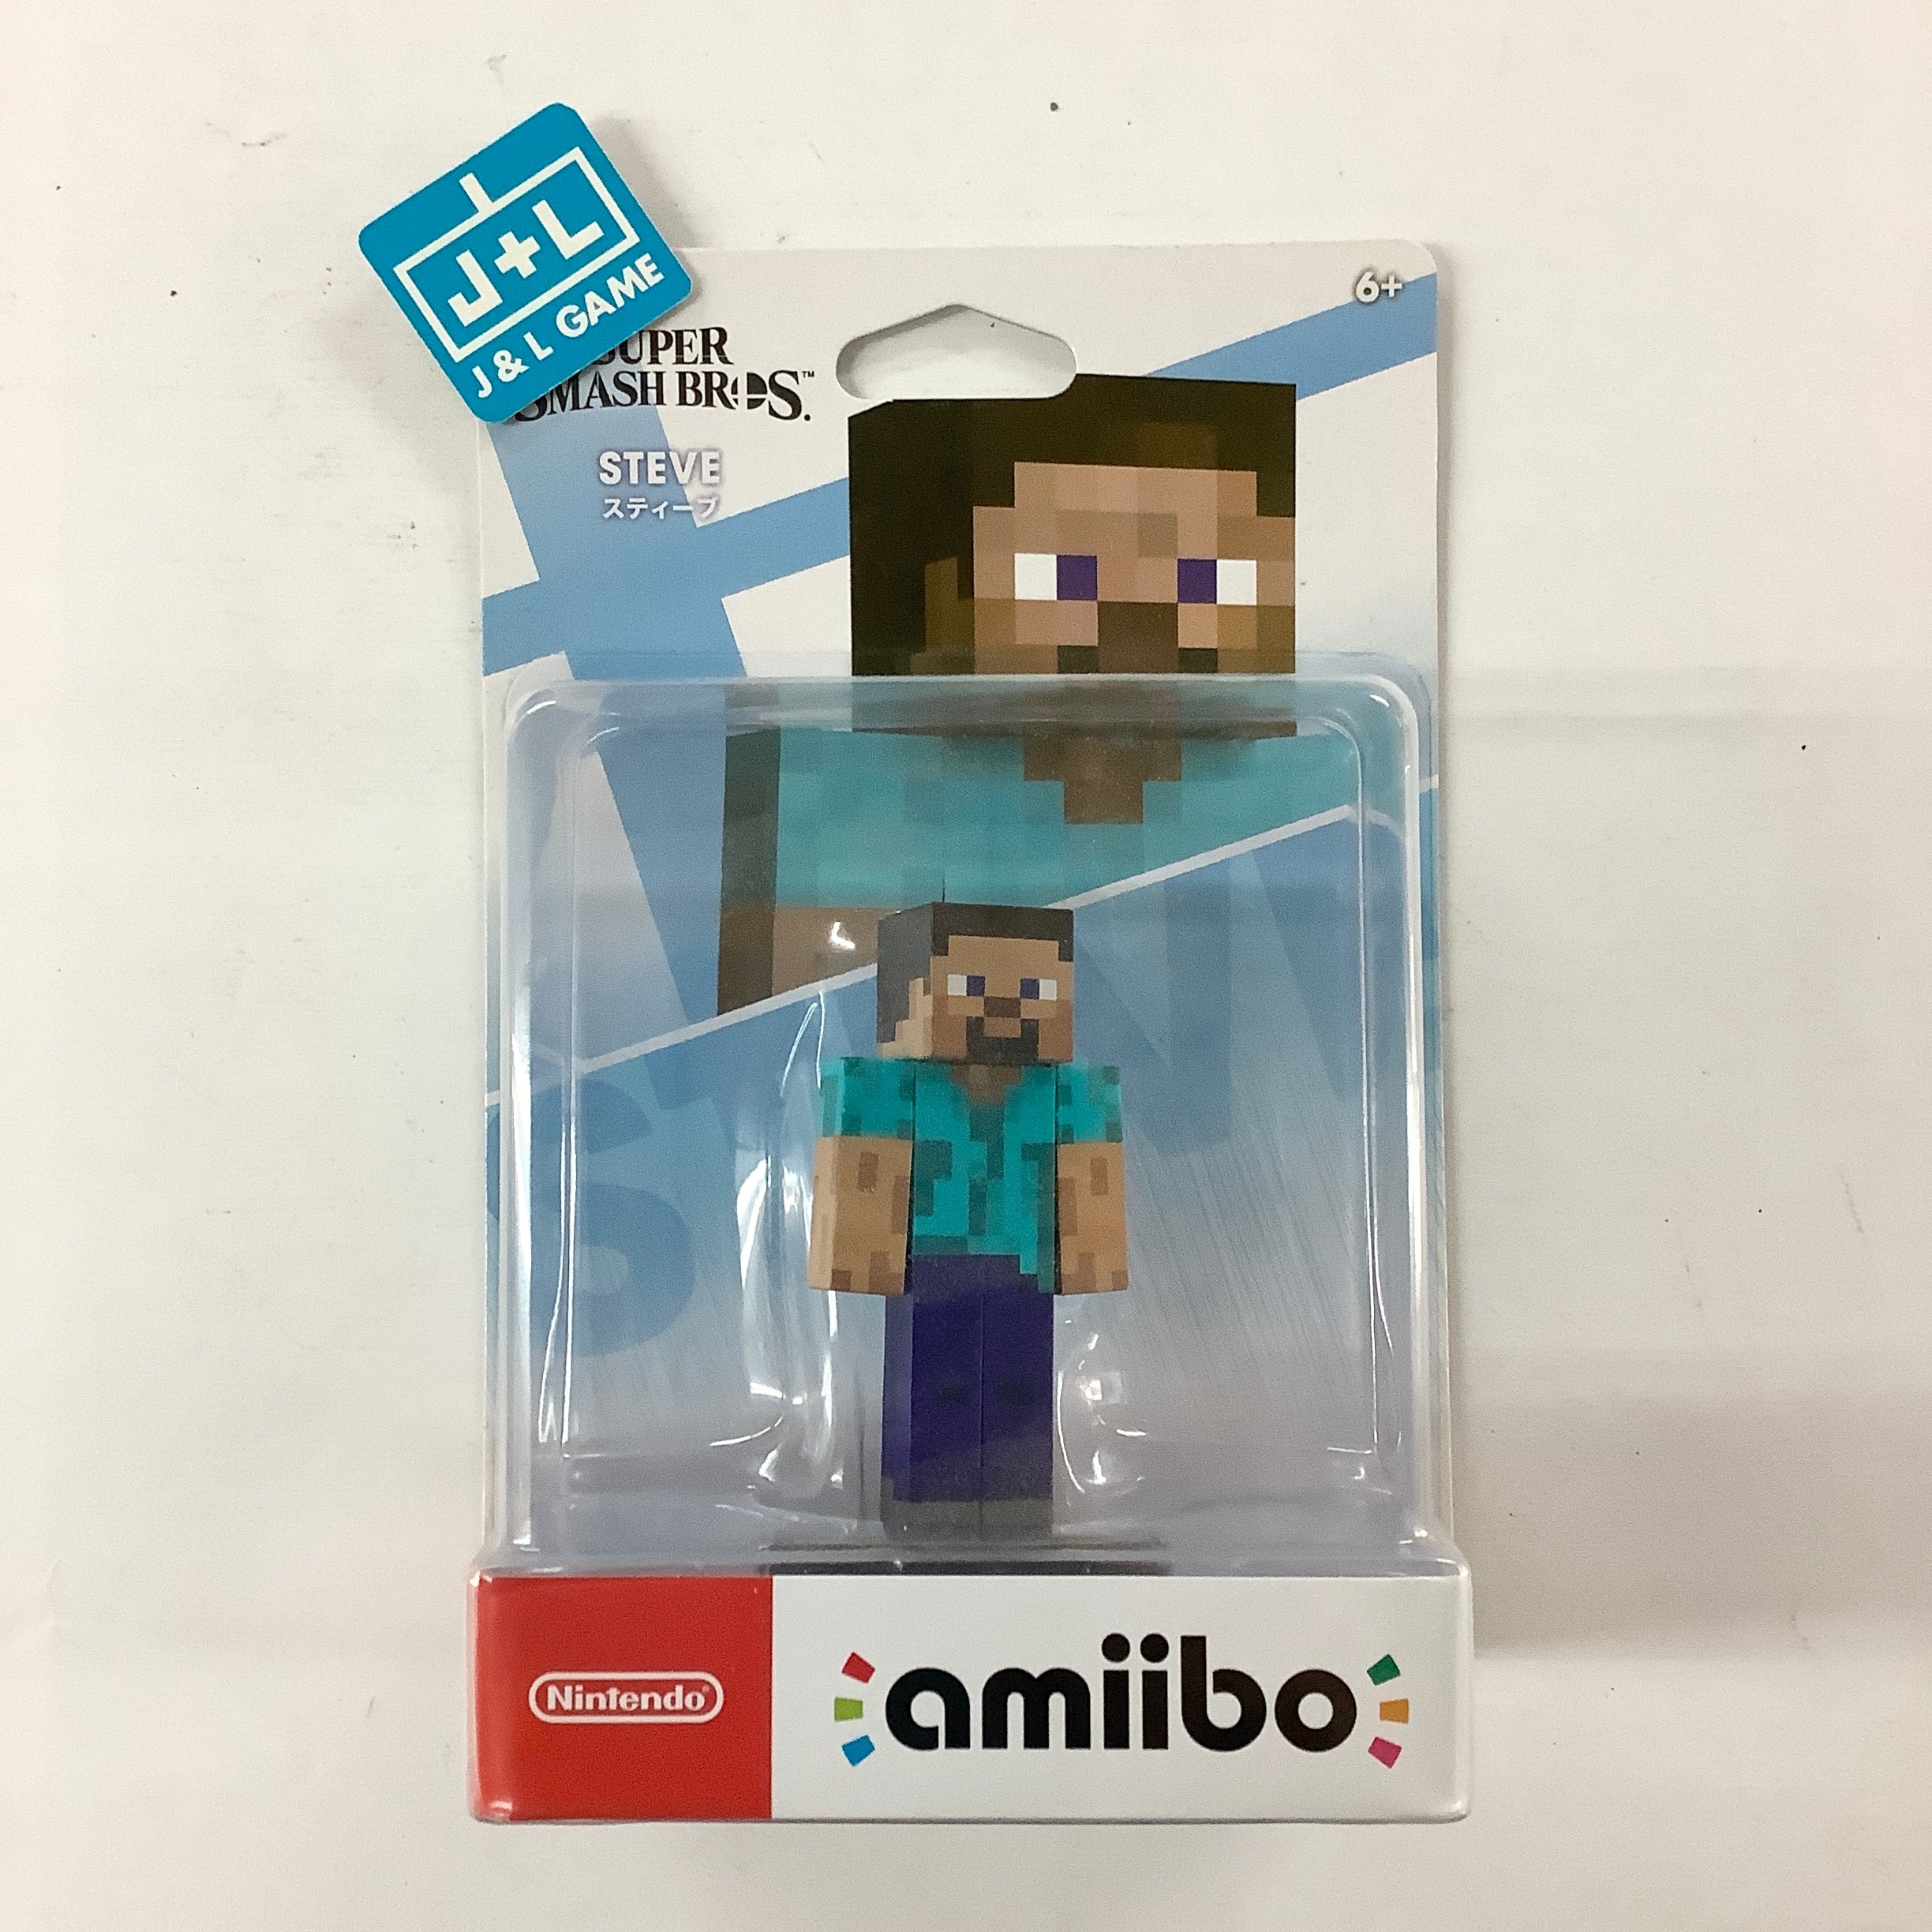 Minecraft Steve (Super Smash Bros. series) - Nintendo Switch Amiibo (Japanese Import) Amiibo Nintendo   